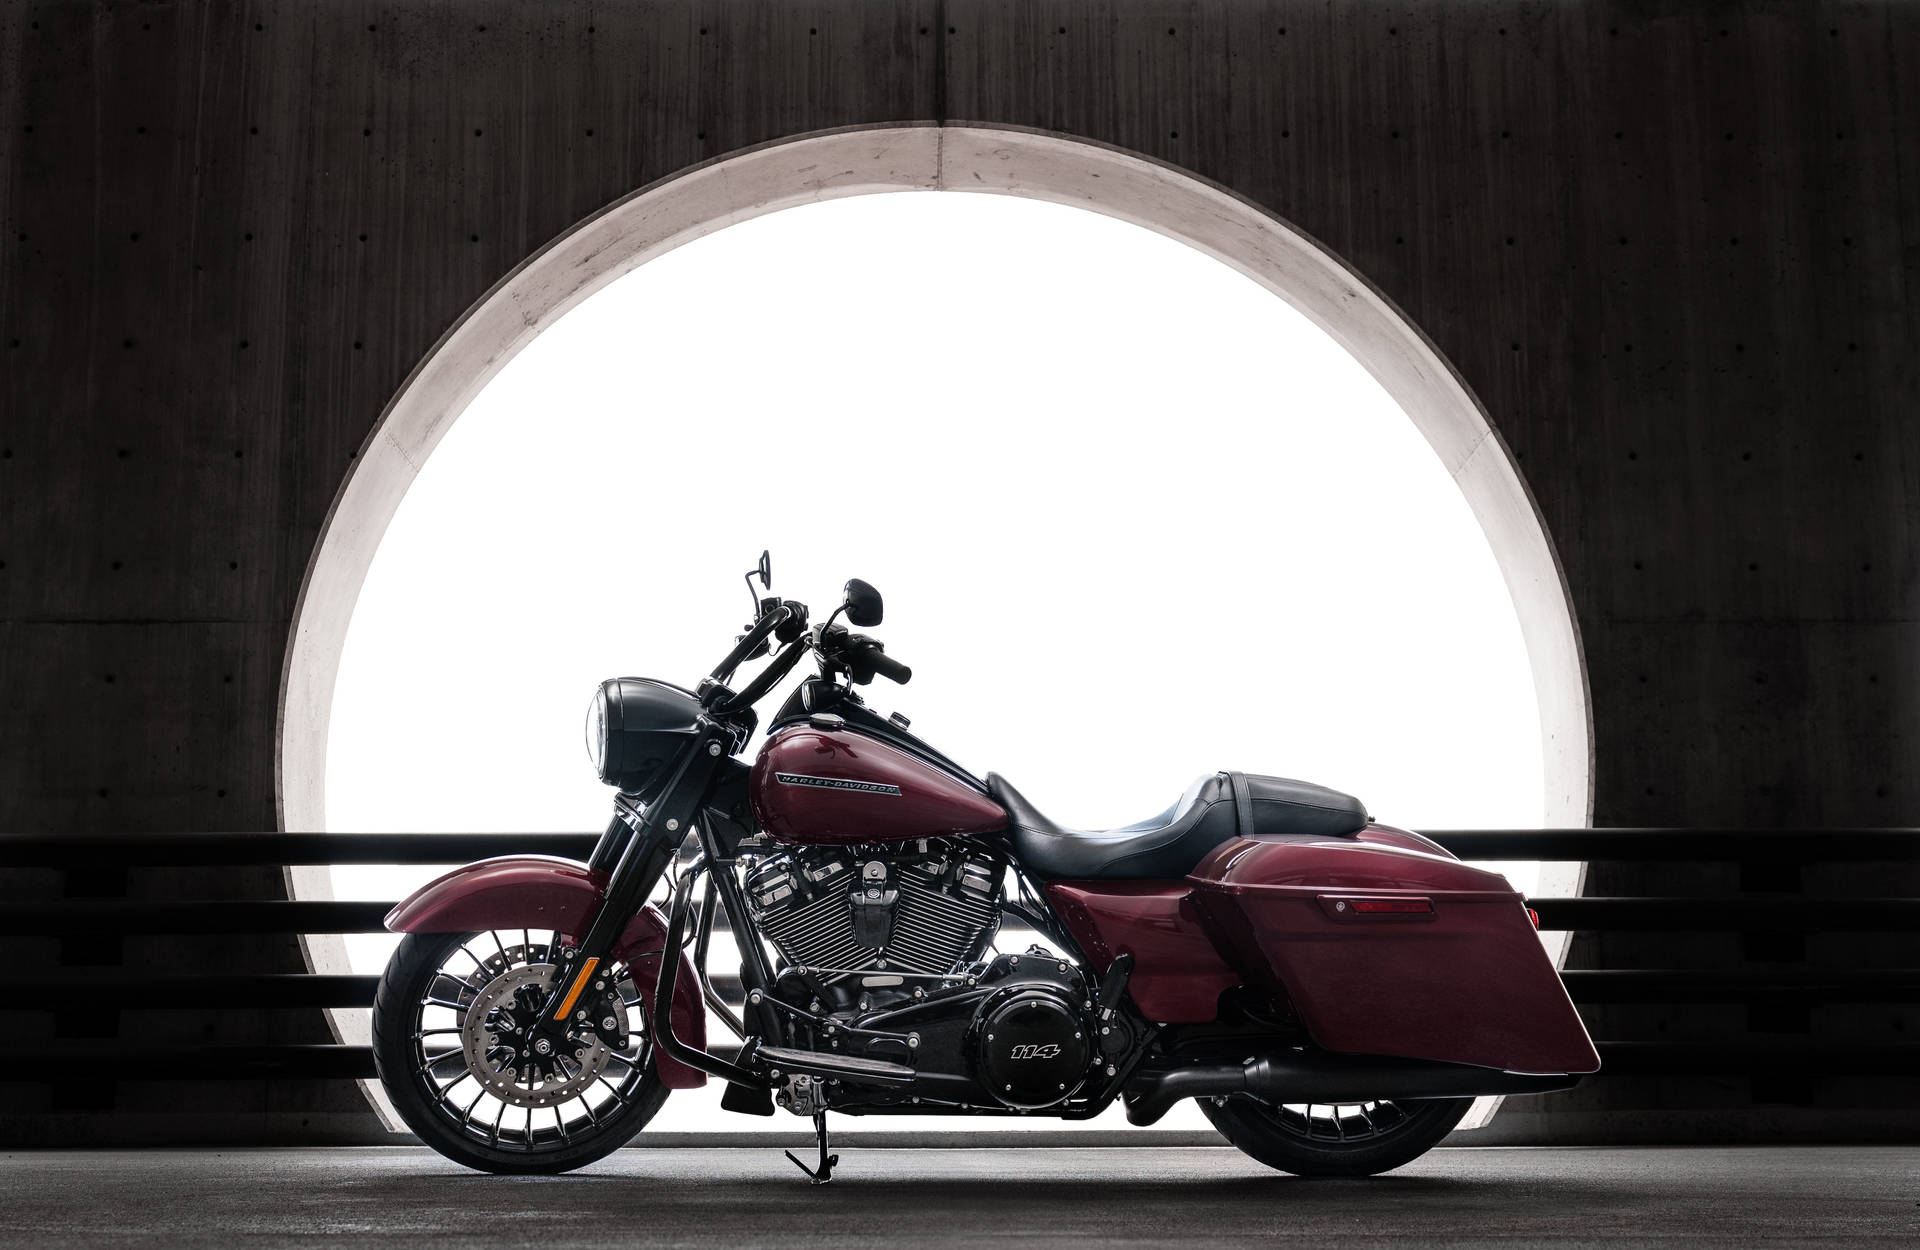 Harley Davidson 5074X3303 Wallpaper and Background Image